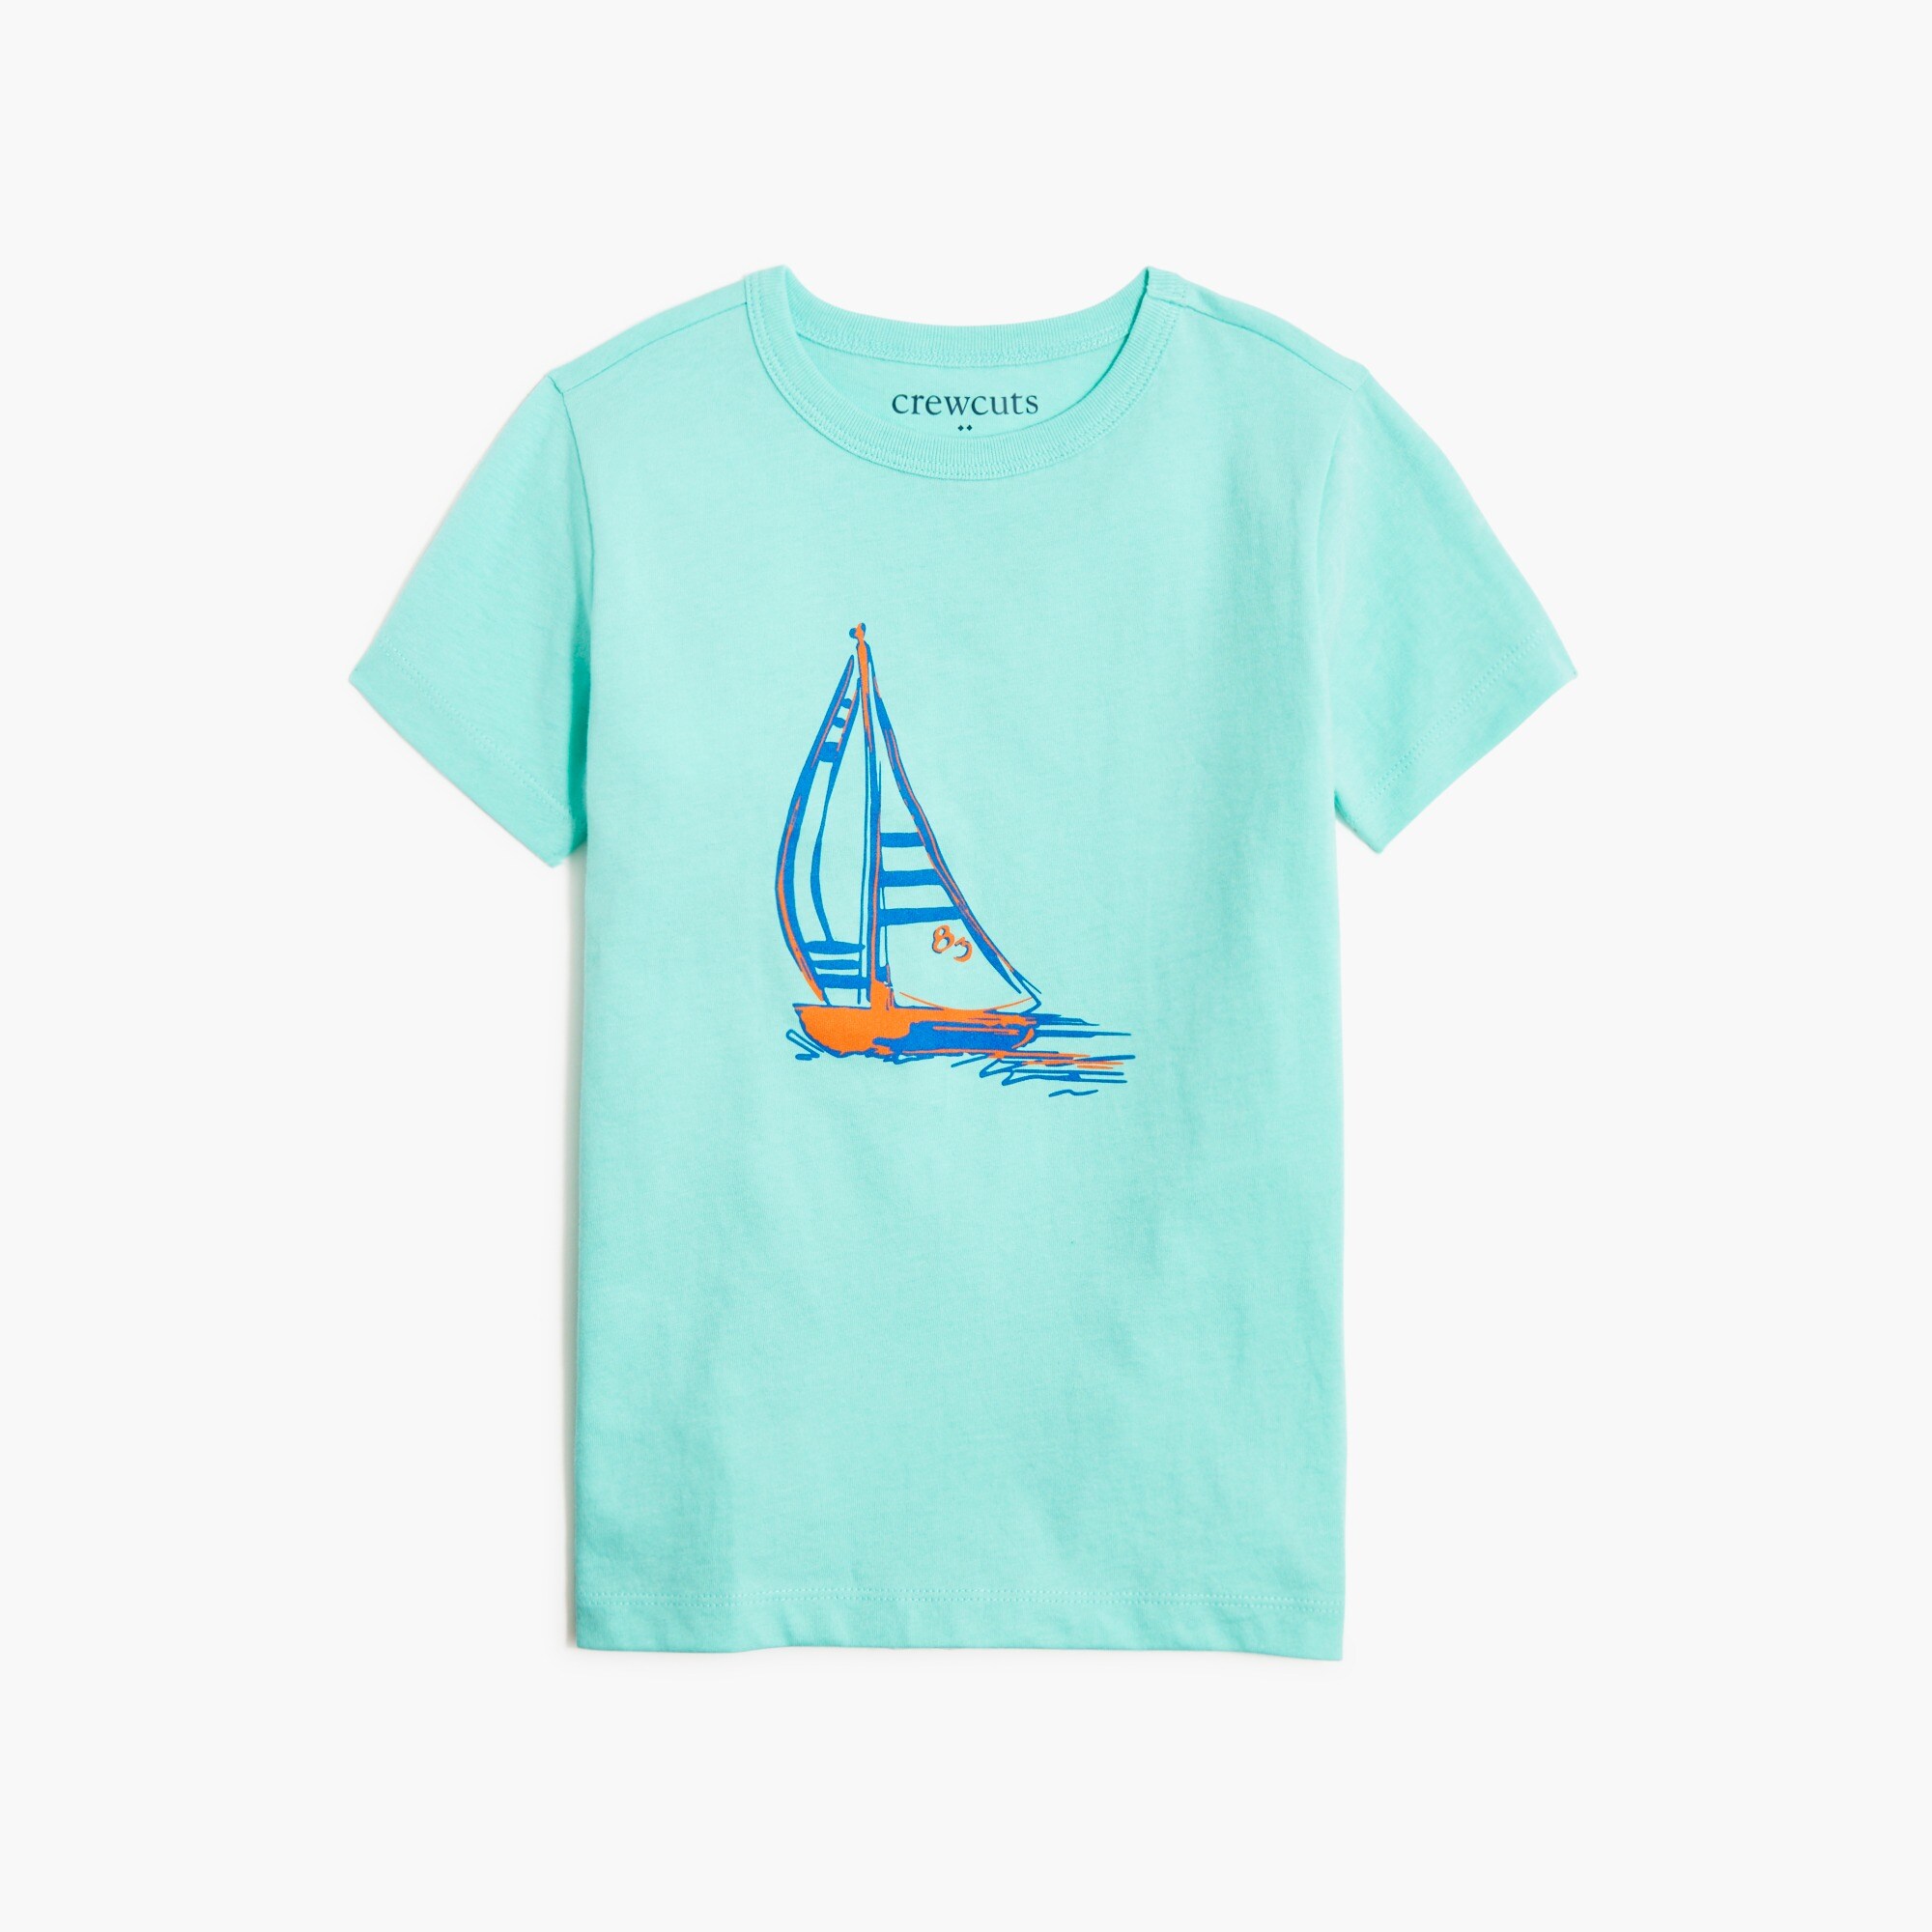  Boys' sailboat graphic tee